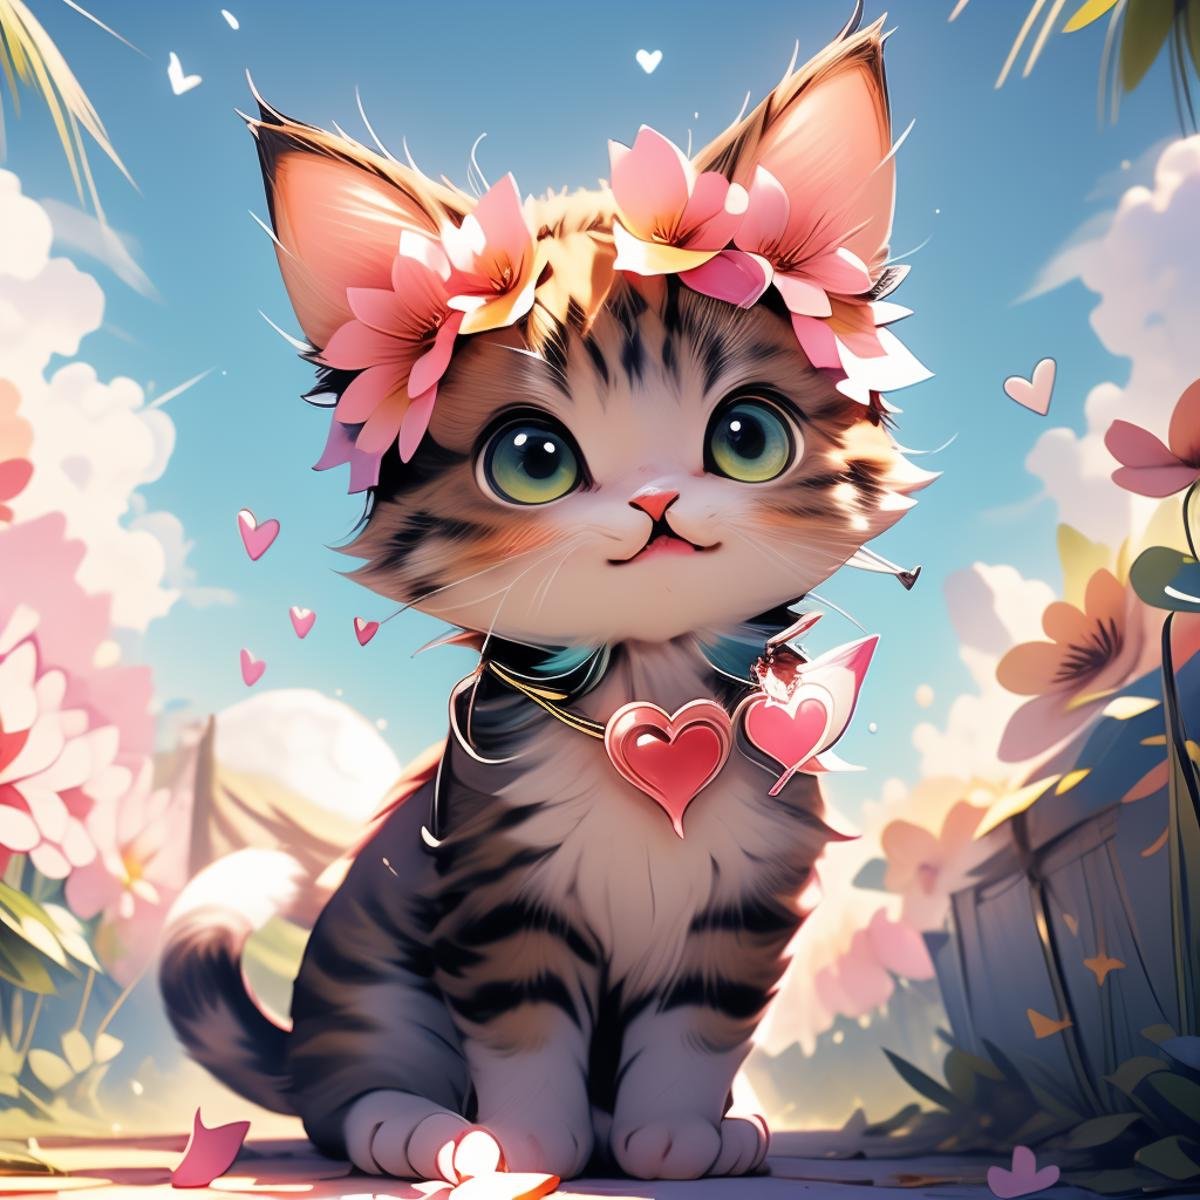 (no human:1.3), illustrious, Darling, cute cat animal, big eyes, flower petals, (colorful: 1.2), 3d, <lora:ValentineNatureStyle:0.9> ValentineNatureStyle, flowers, hearts,<lora:cat_20230627113759:0.9>